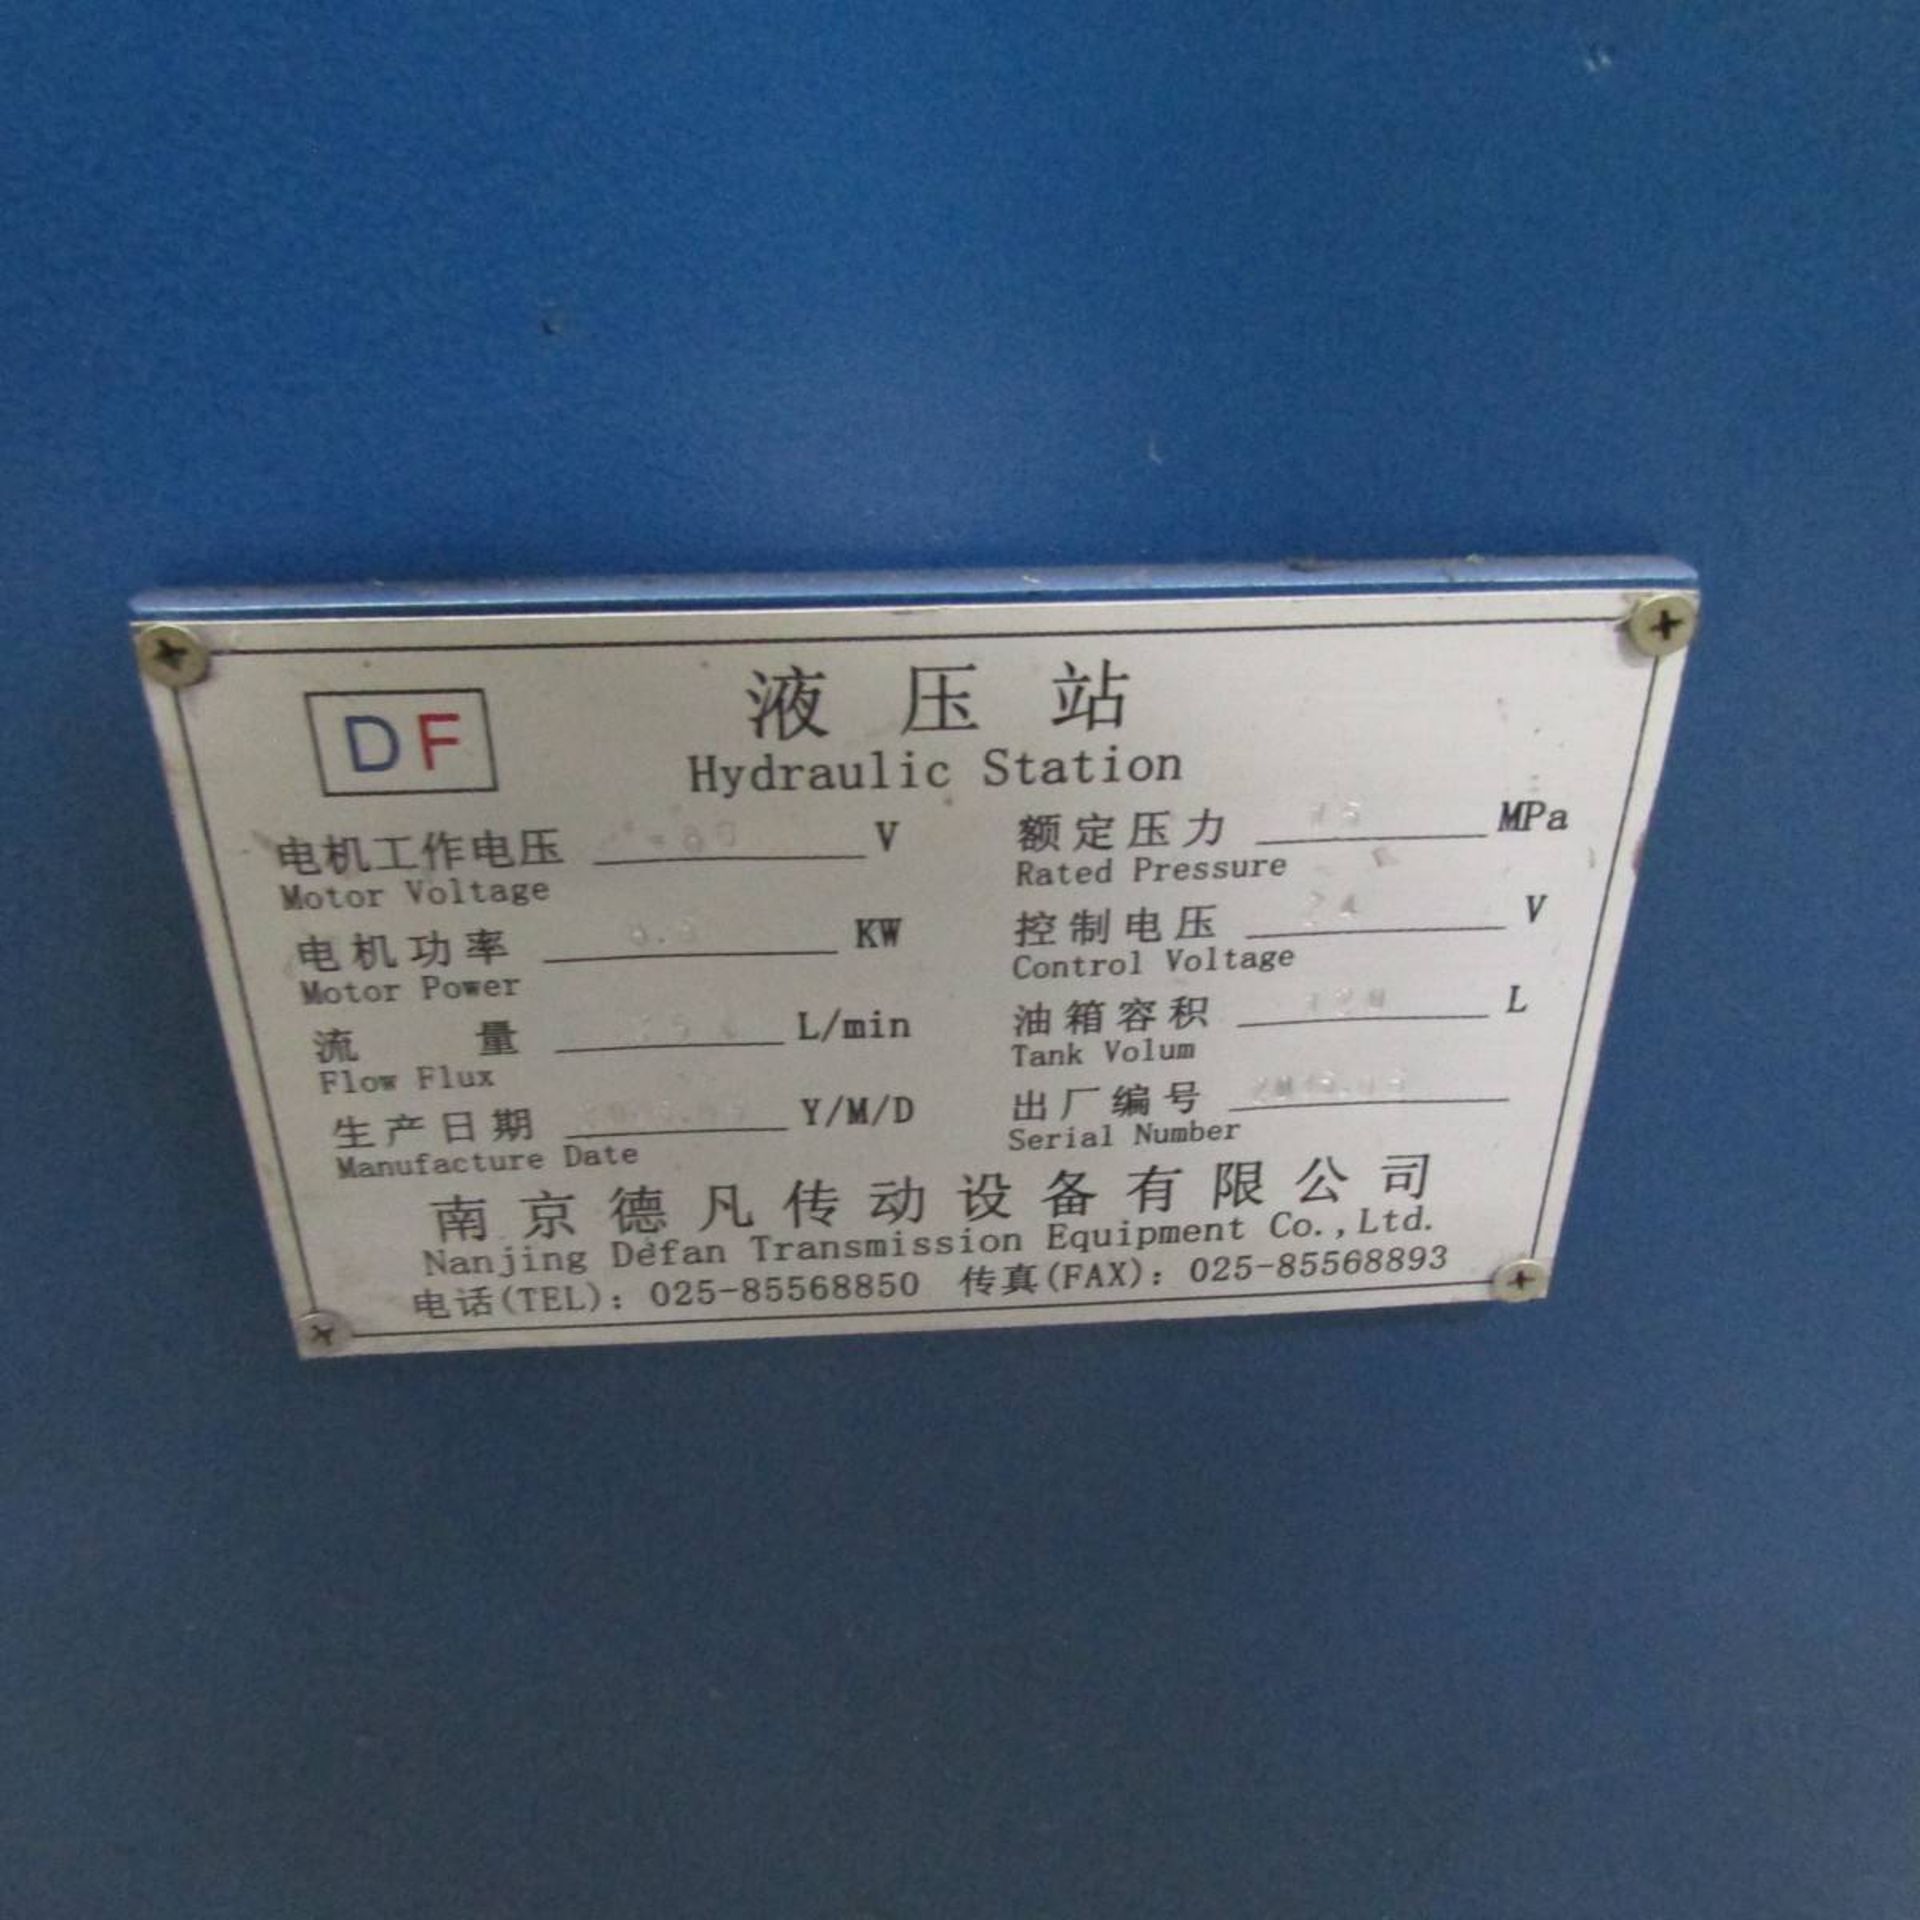 2016 Nanjing Defan Transmission Equipment Co. Hydraulic Station - Image 2 of 2